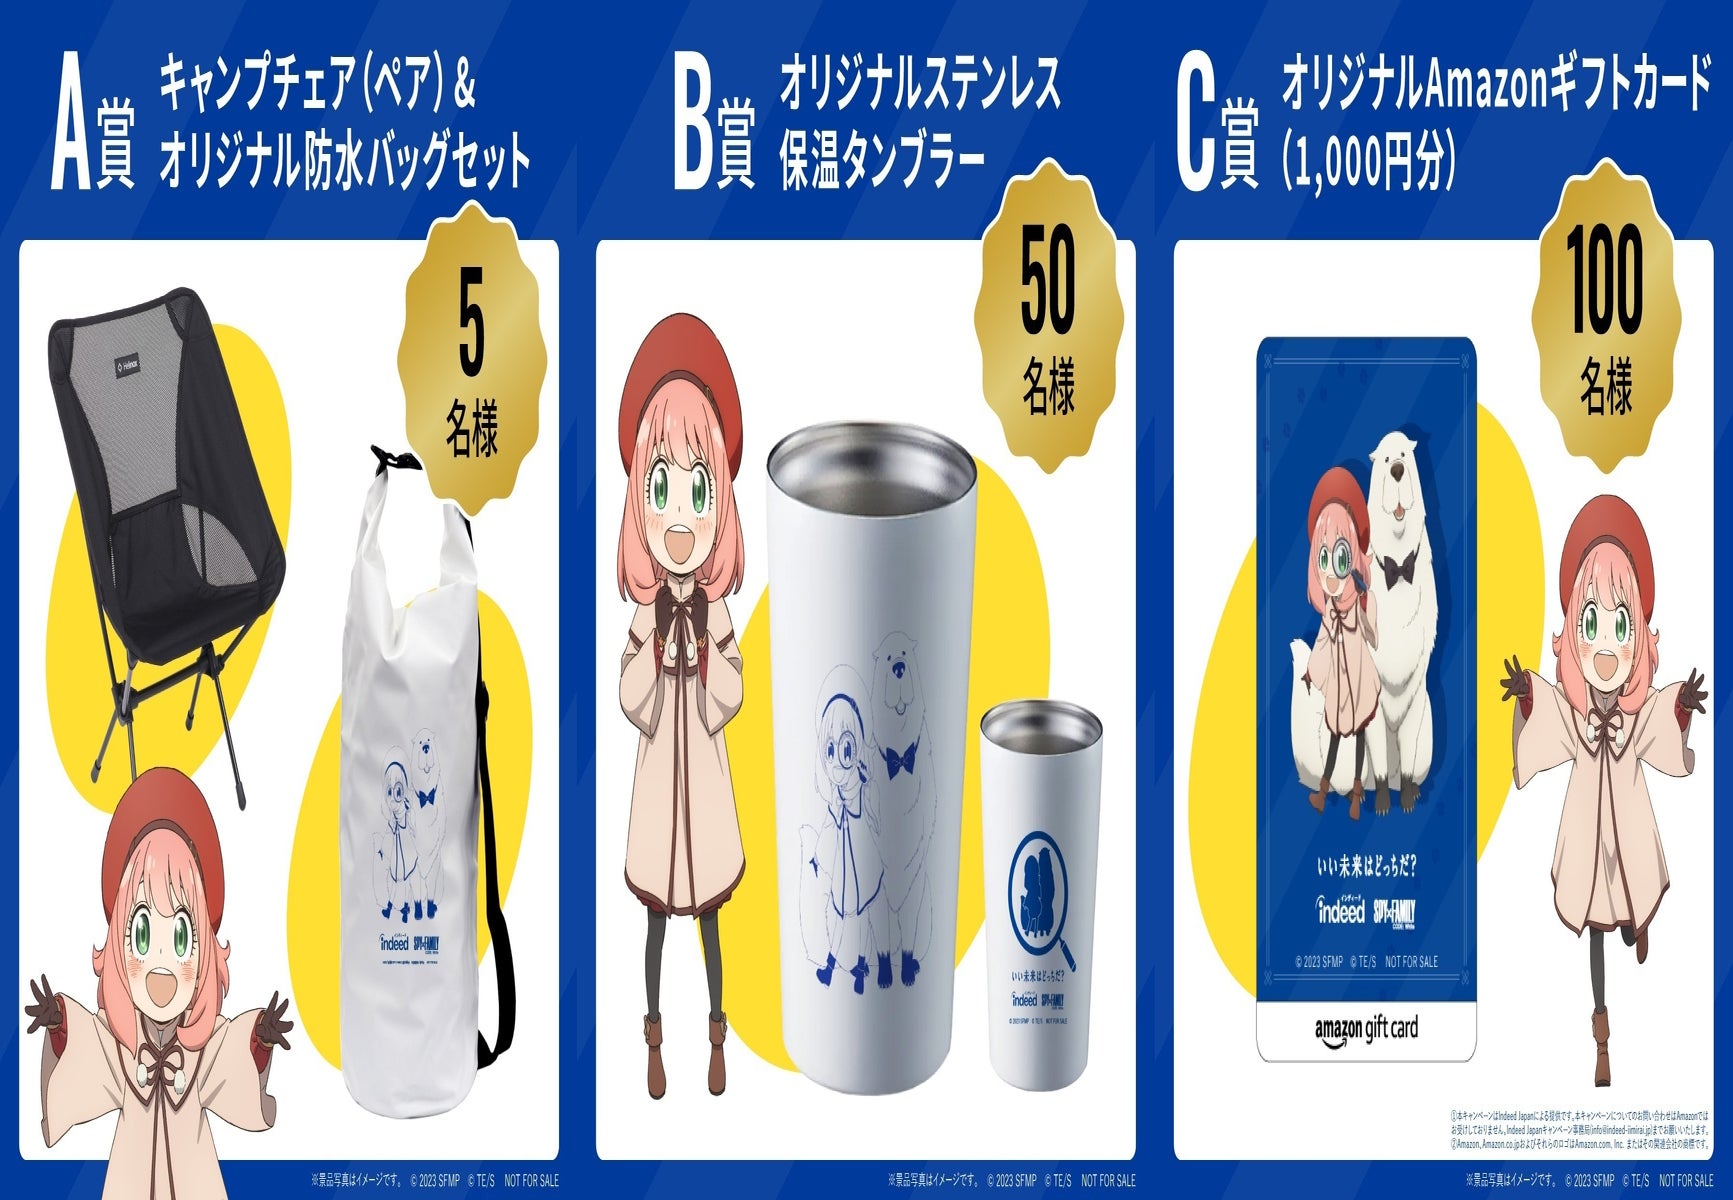 Indeed Japan、「劇場版 SPY×FAMILY CODE: White」とのコラボグッズが当たるキャンペーンを実施